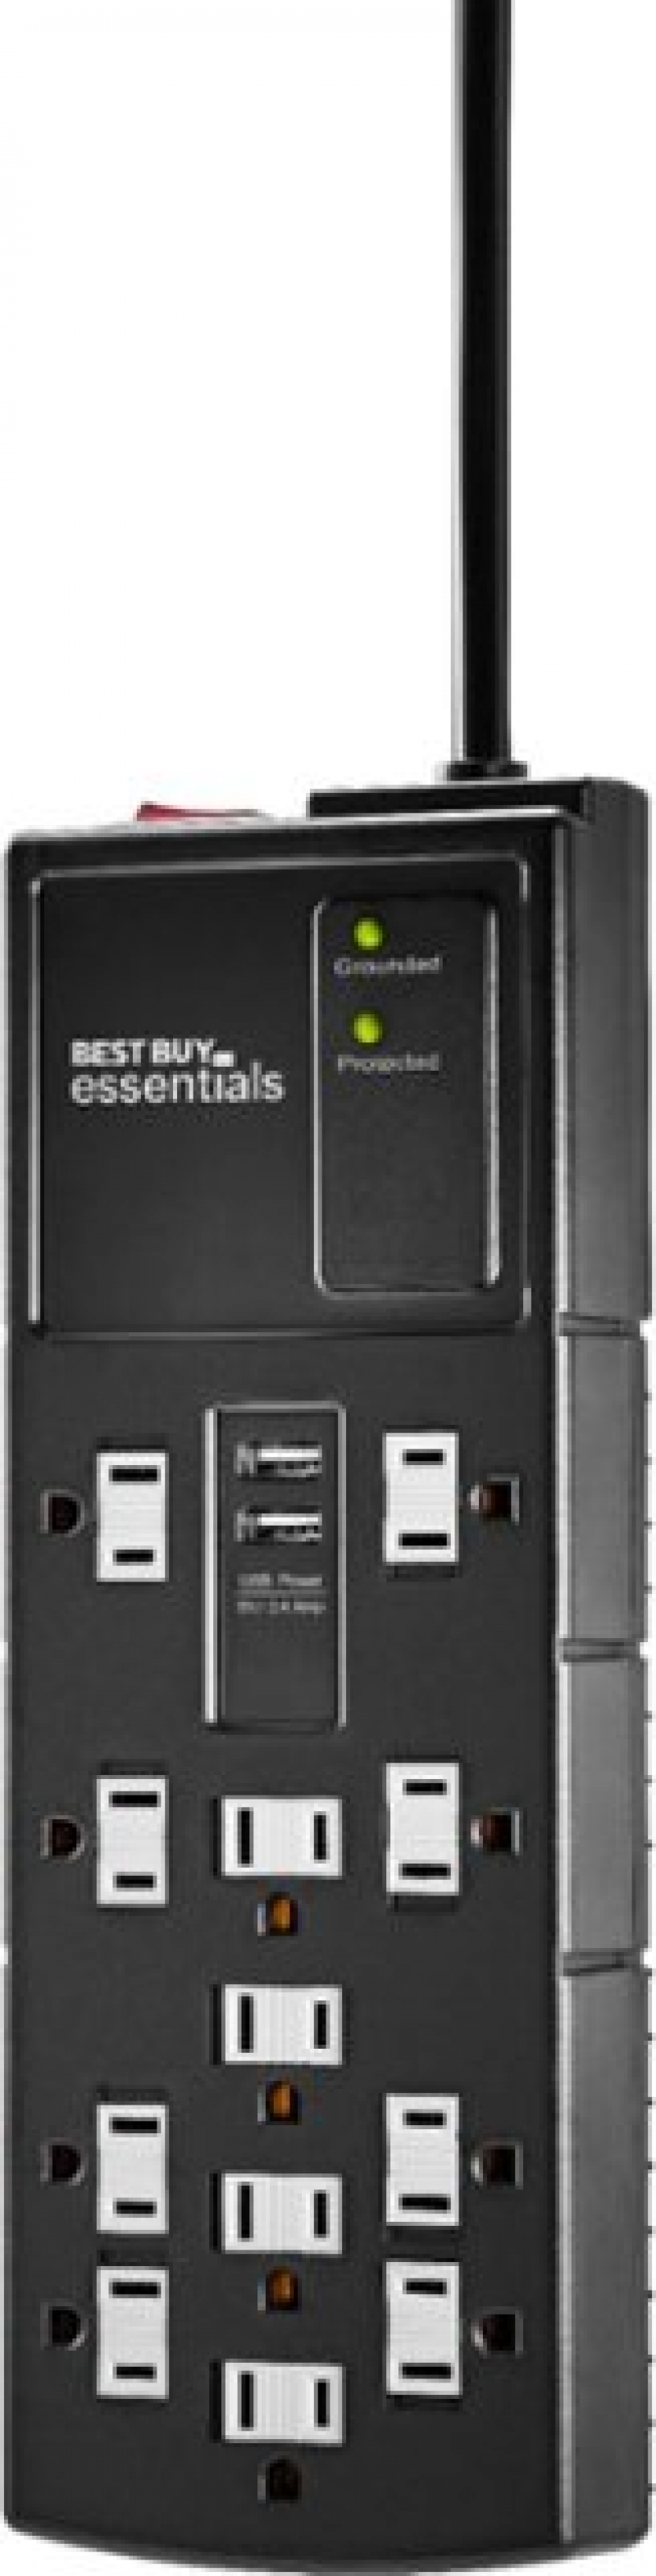 ihocon: [Best Buy自家品牌] Best Buy essentials 12-Outlet/2-USB Surge Protector Strip 電湧保護電源板/延長線插座 (12個插座 + 2個USB槽)